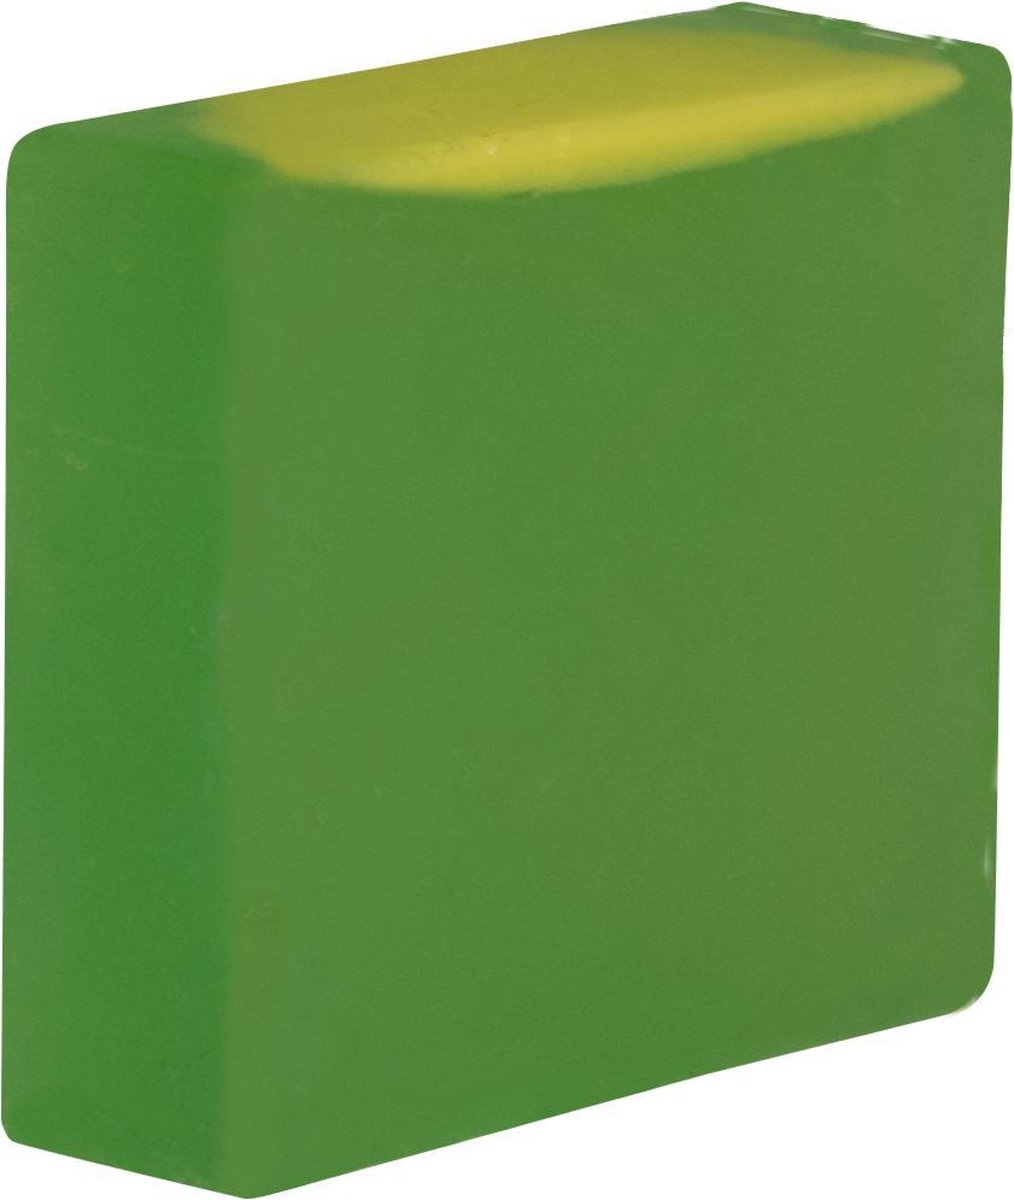 Kaylenn Premium zeep - Tropical Passion - 150gr - handgemaakt - vegan - plak zeep